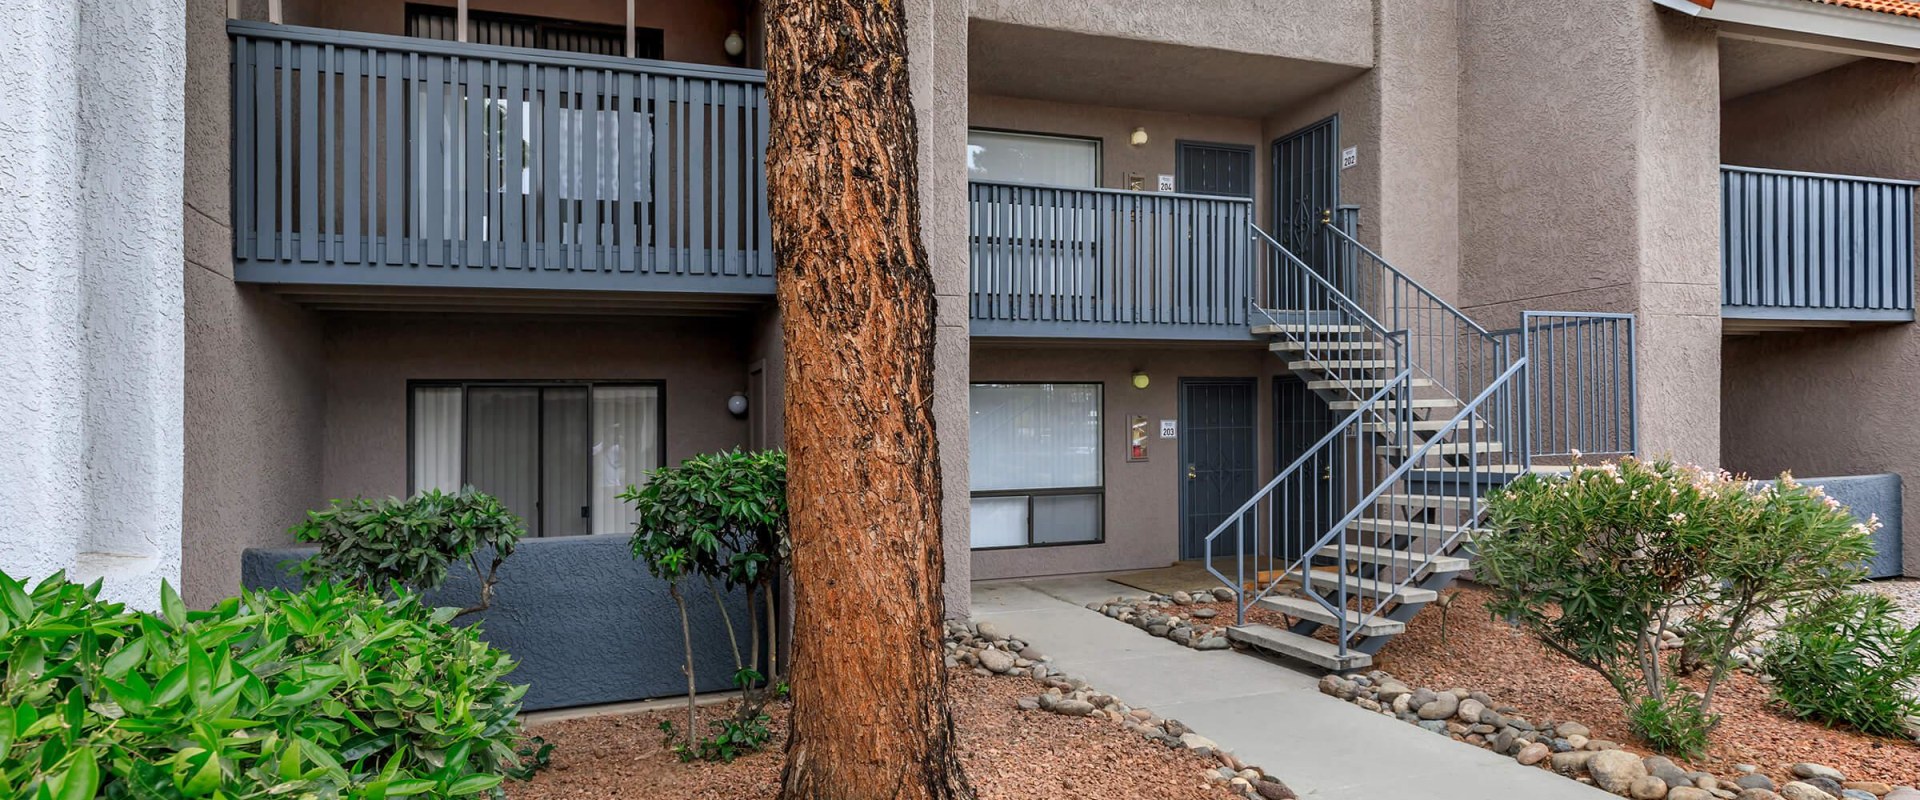 Exploring Tucson Apartments for Rent